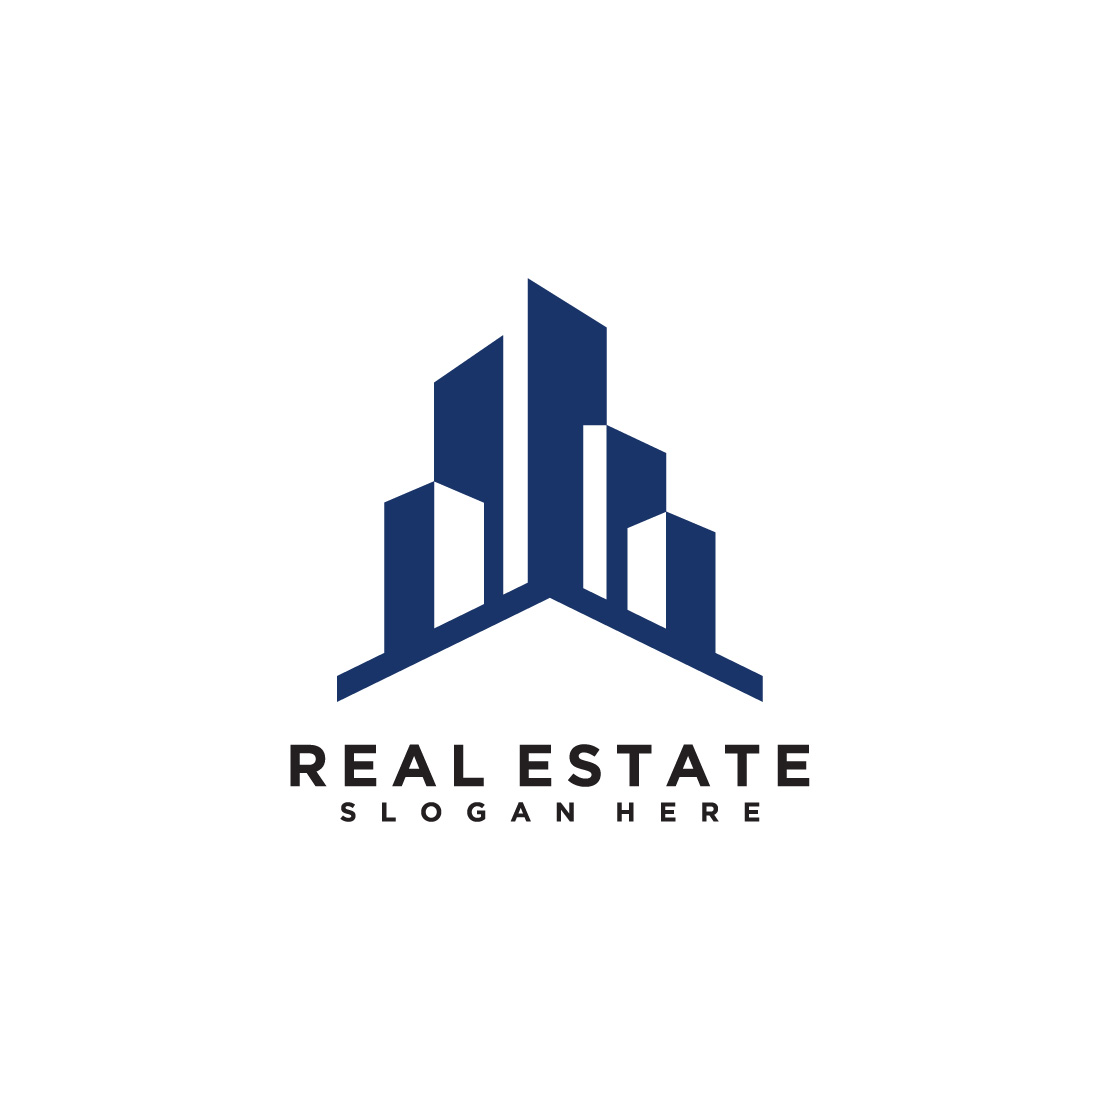 Buildings real estate logo design cover image.